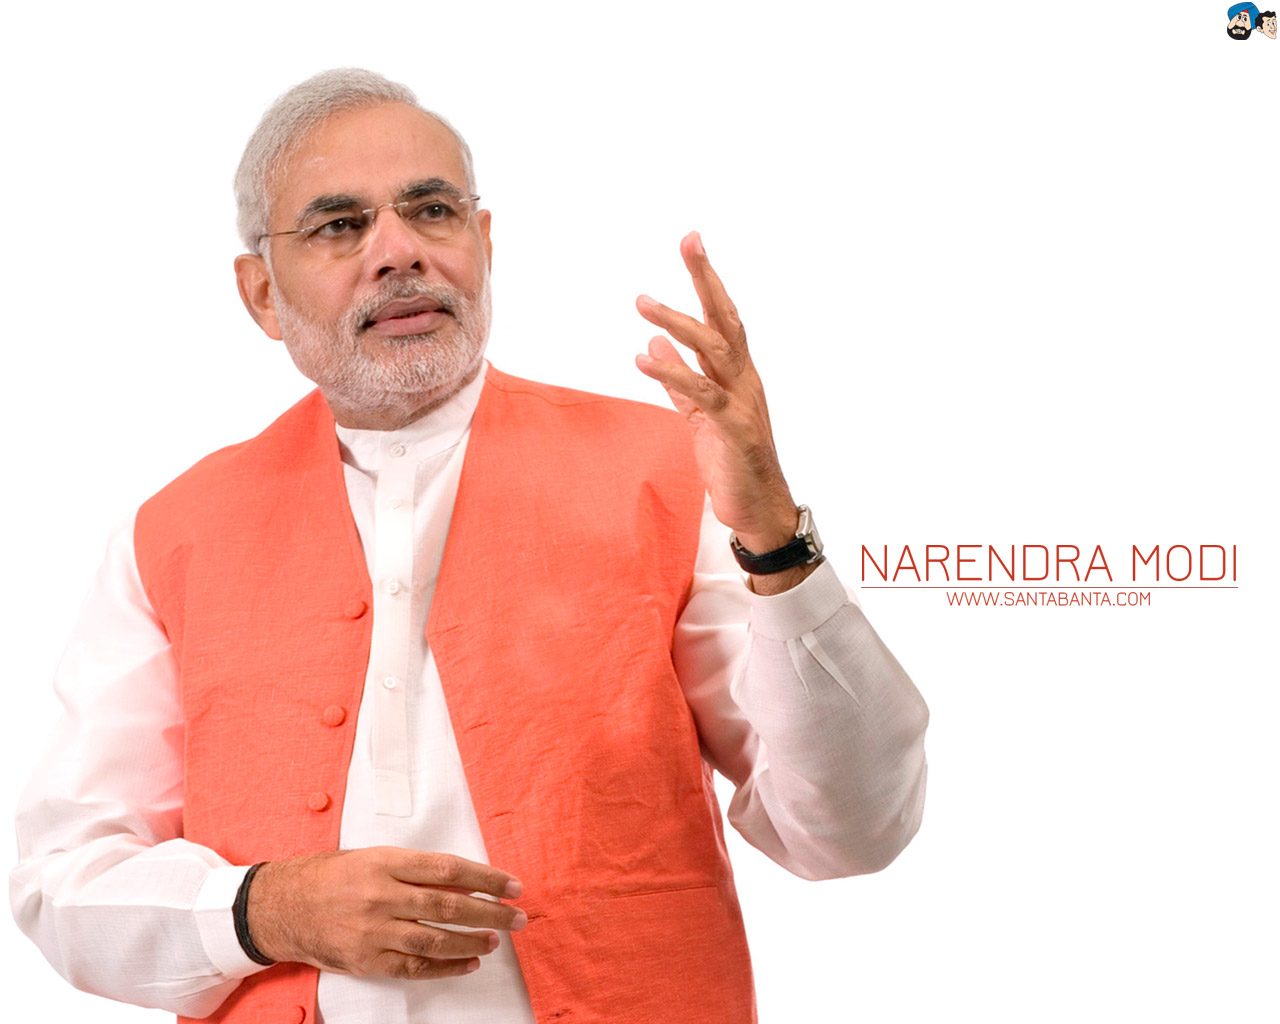 Narendra Modi - Pm Modi Hand Up - HD Wallpaper 